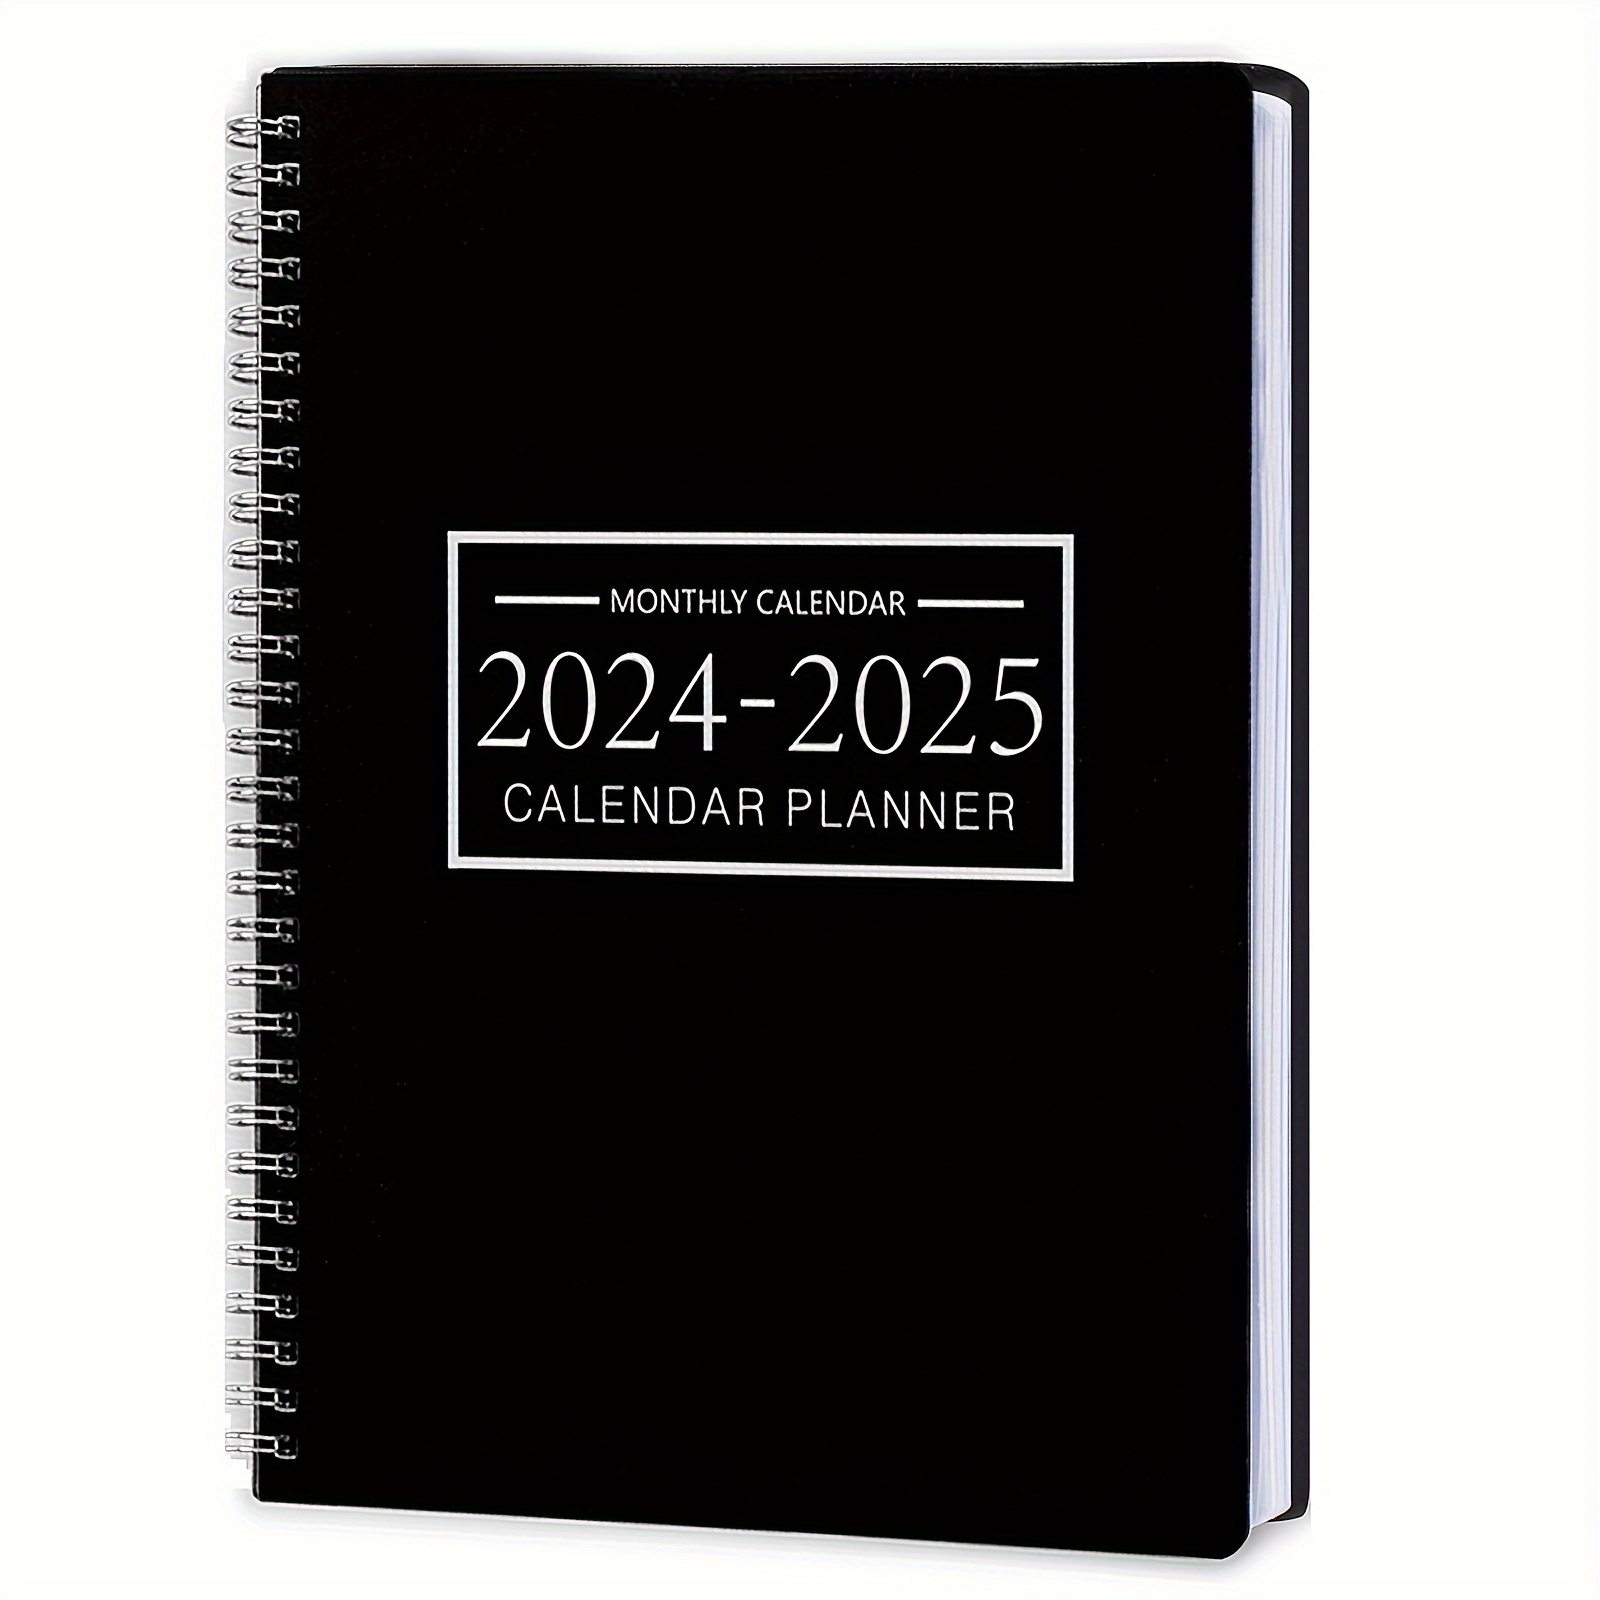  Agenda Mensuel 2024-2025: Planificateur Mensuel de 24